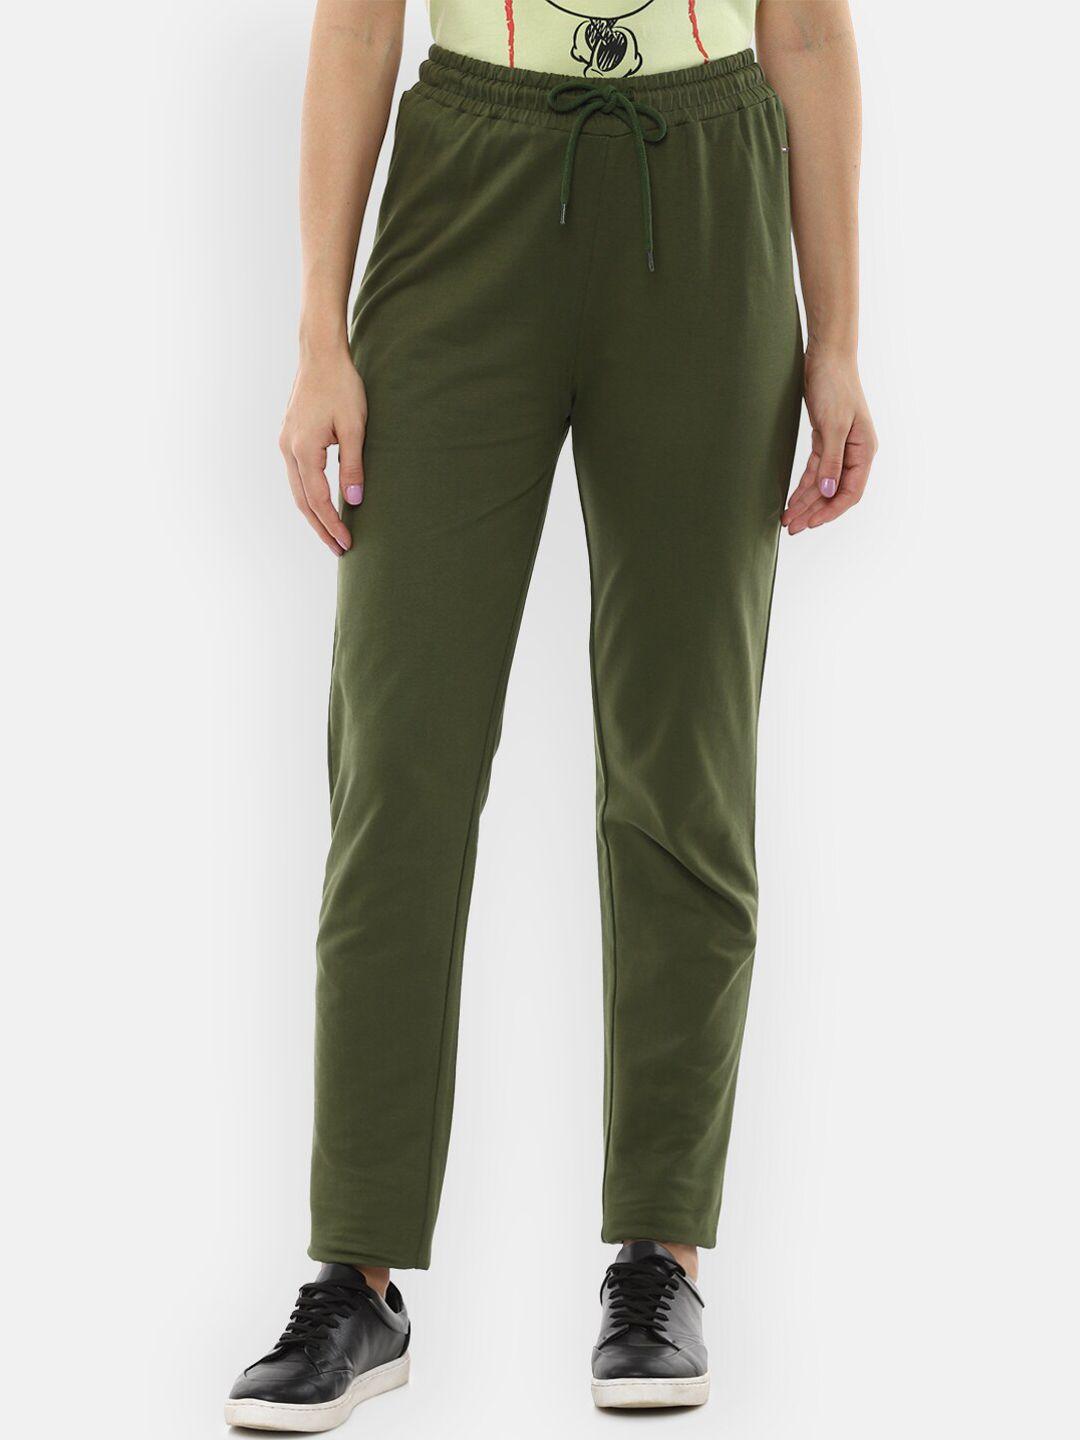 van heusen woman olive green solid cotton track pants